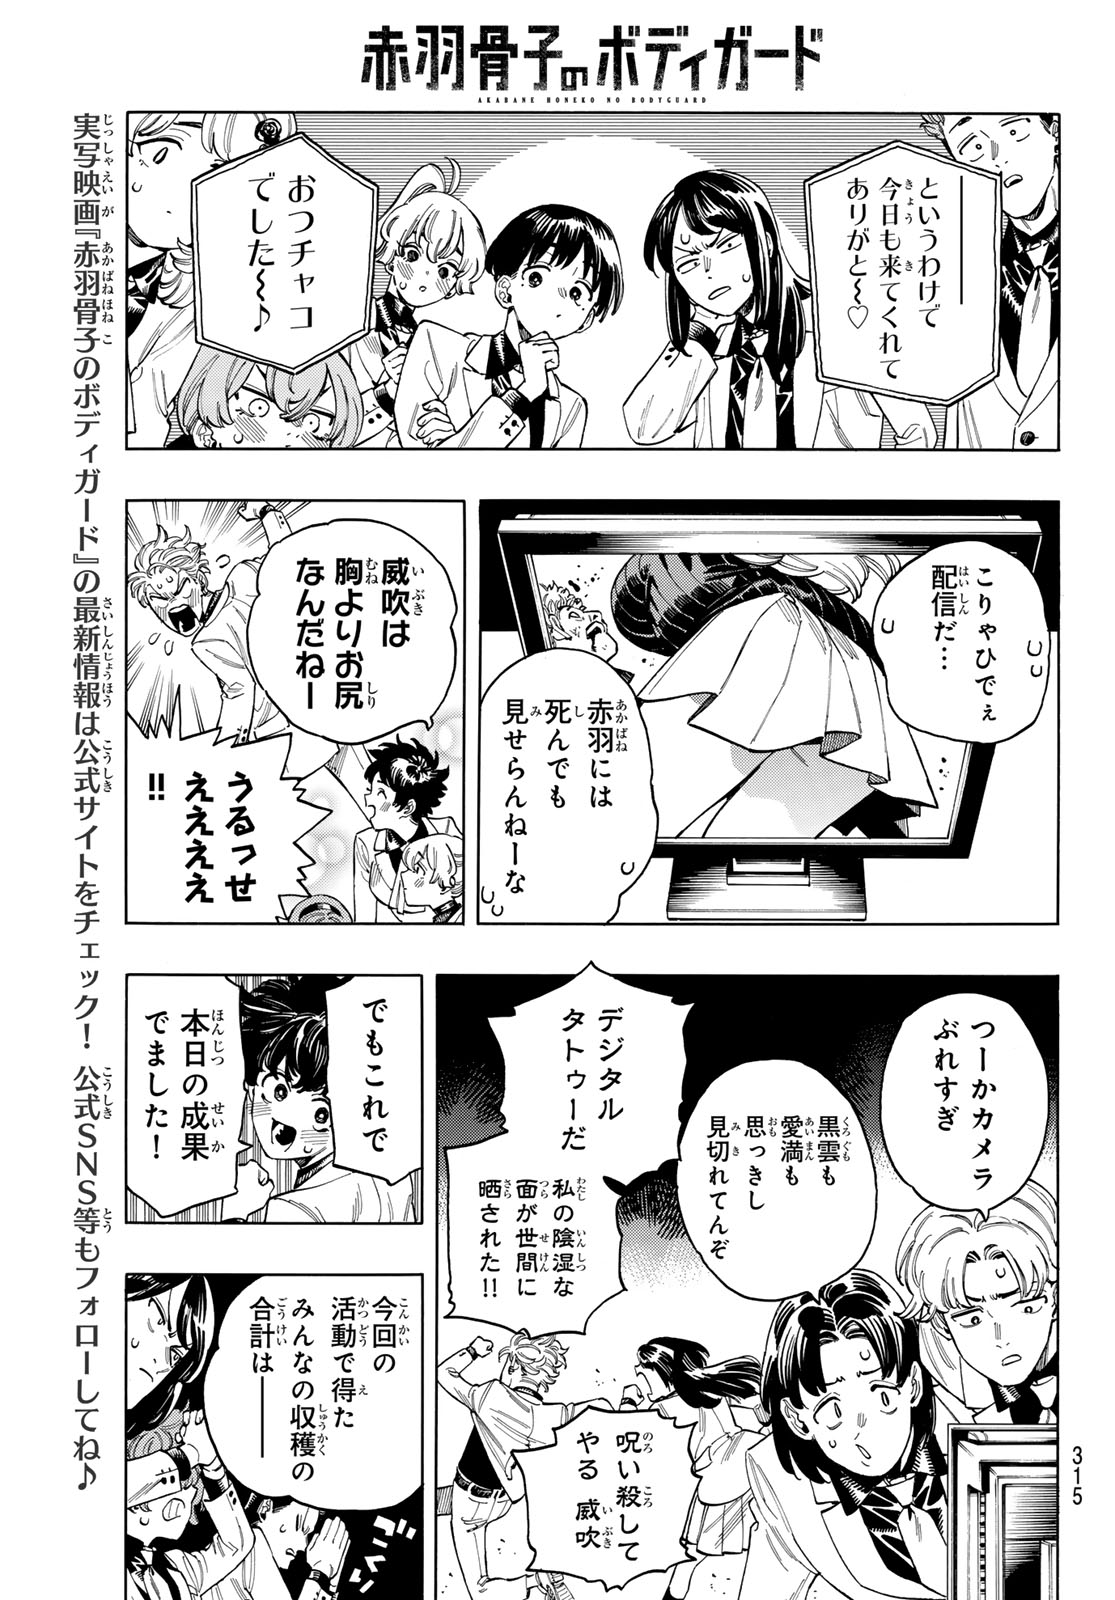 Akabane Honeko no Bodyguard - Chapter 82 - Page 19